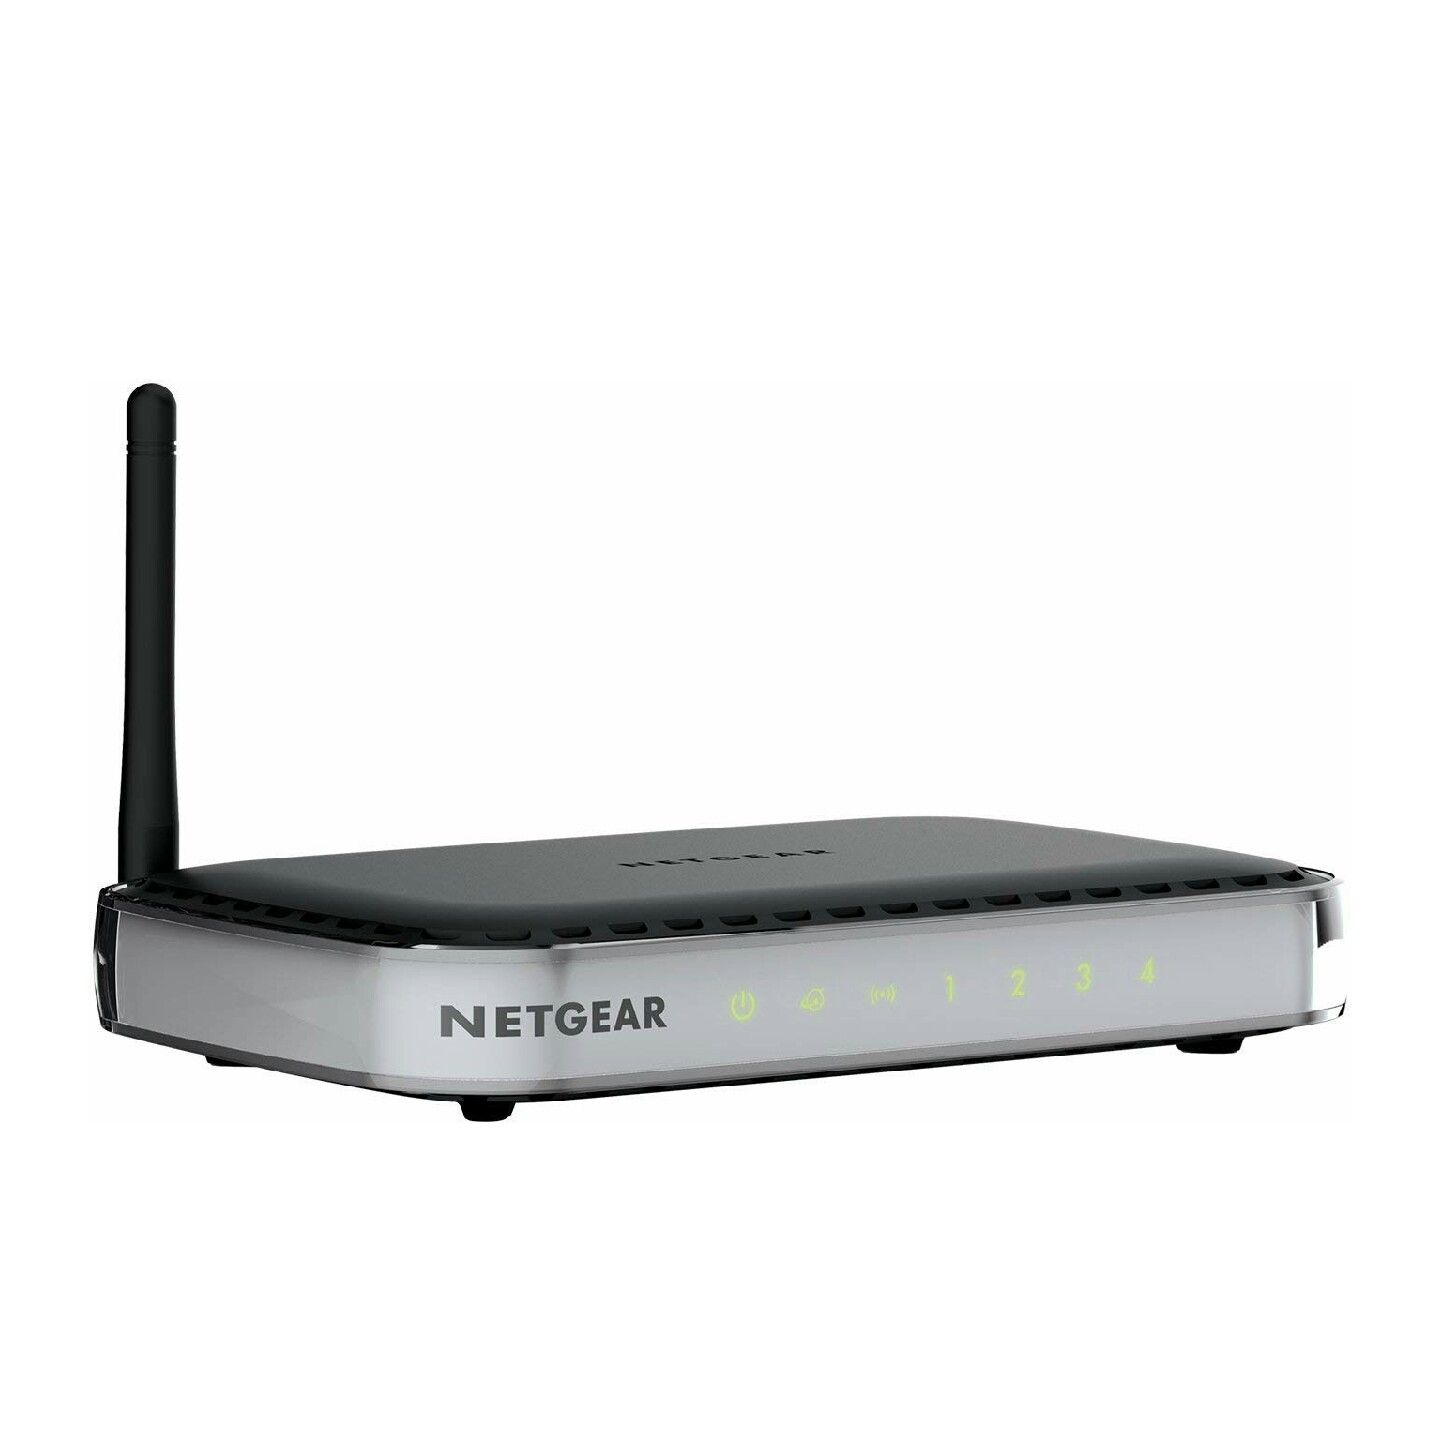 Netgear Wireless Router G54/N150